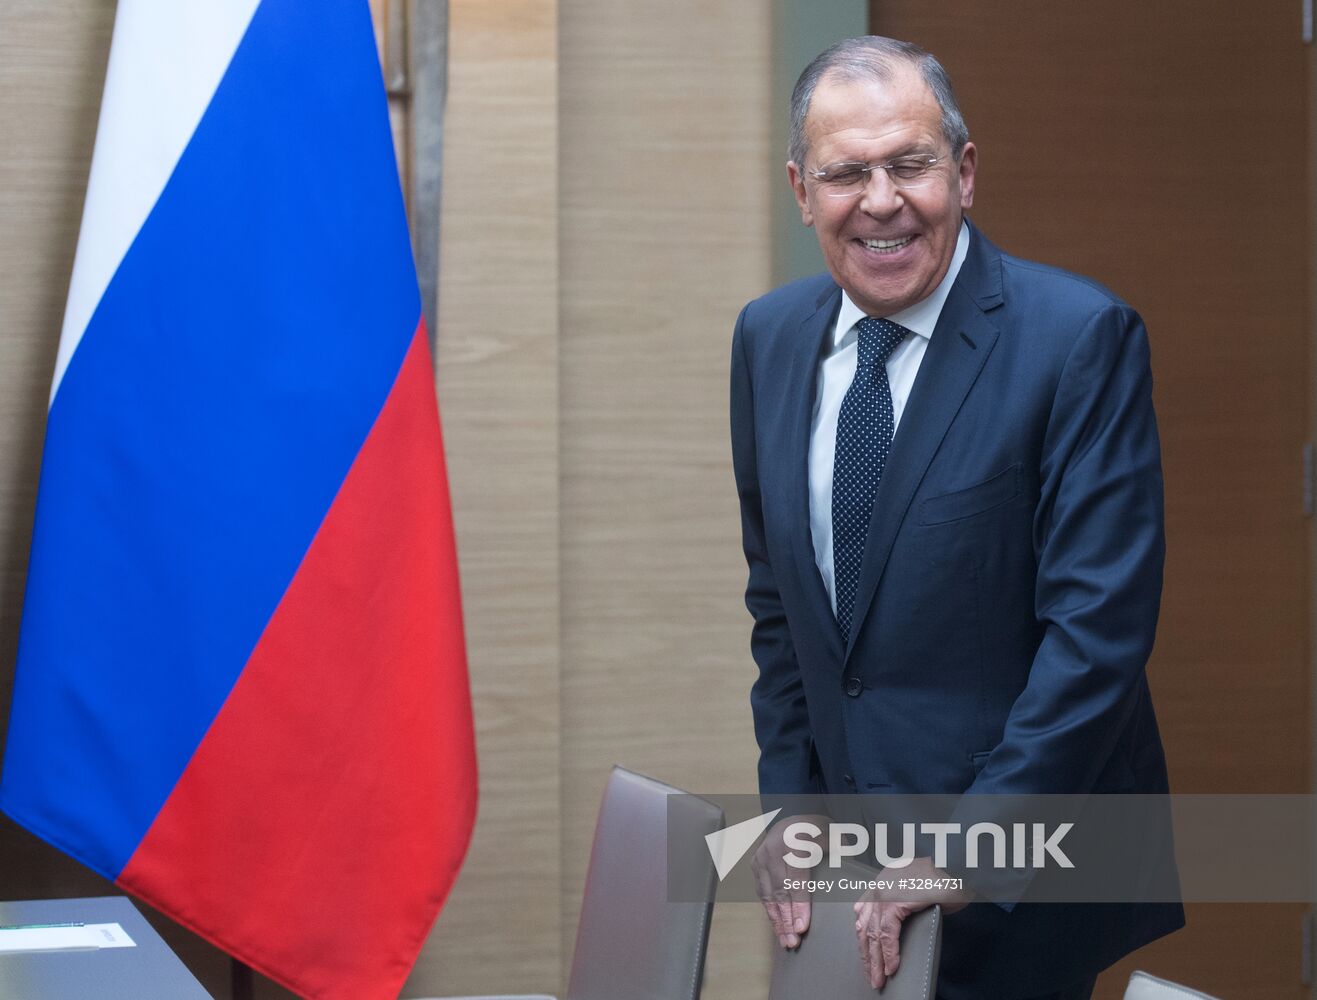 President Vladimir Putin meets with Prime Minister of Belgium Charles Michel